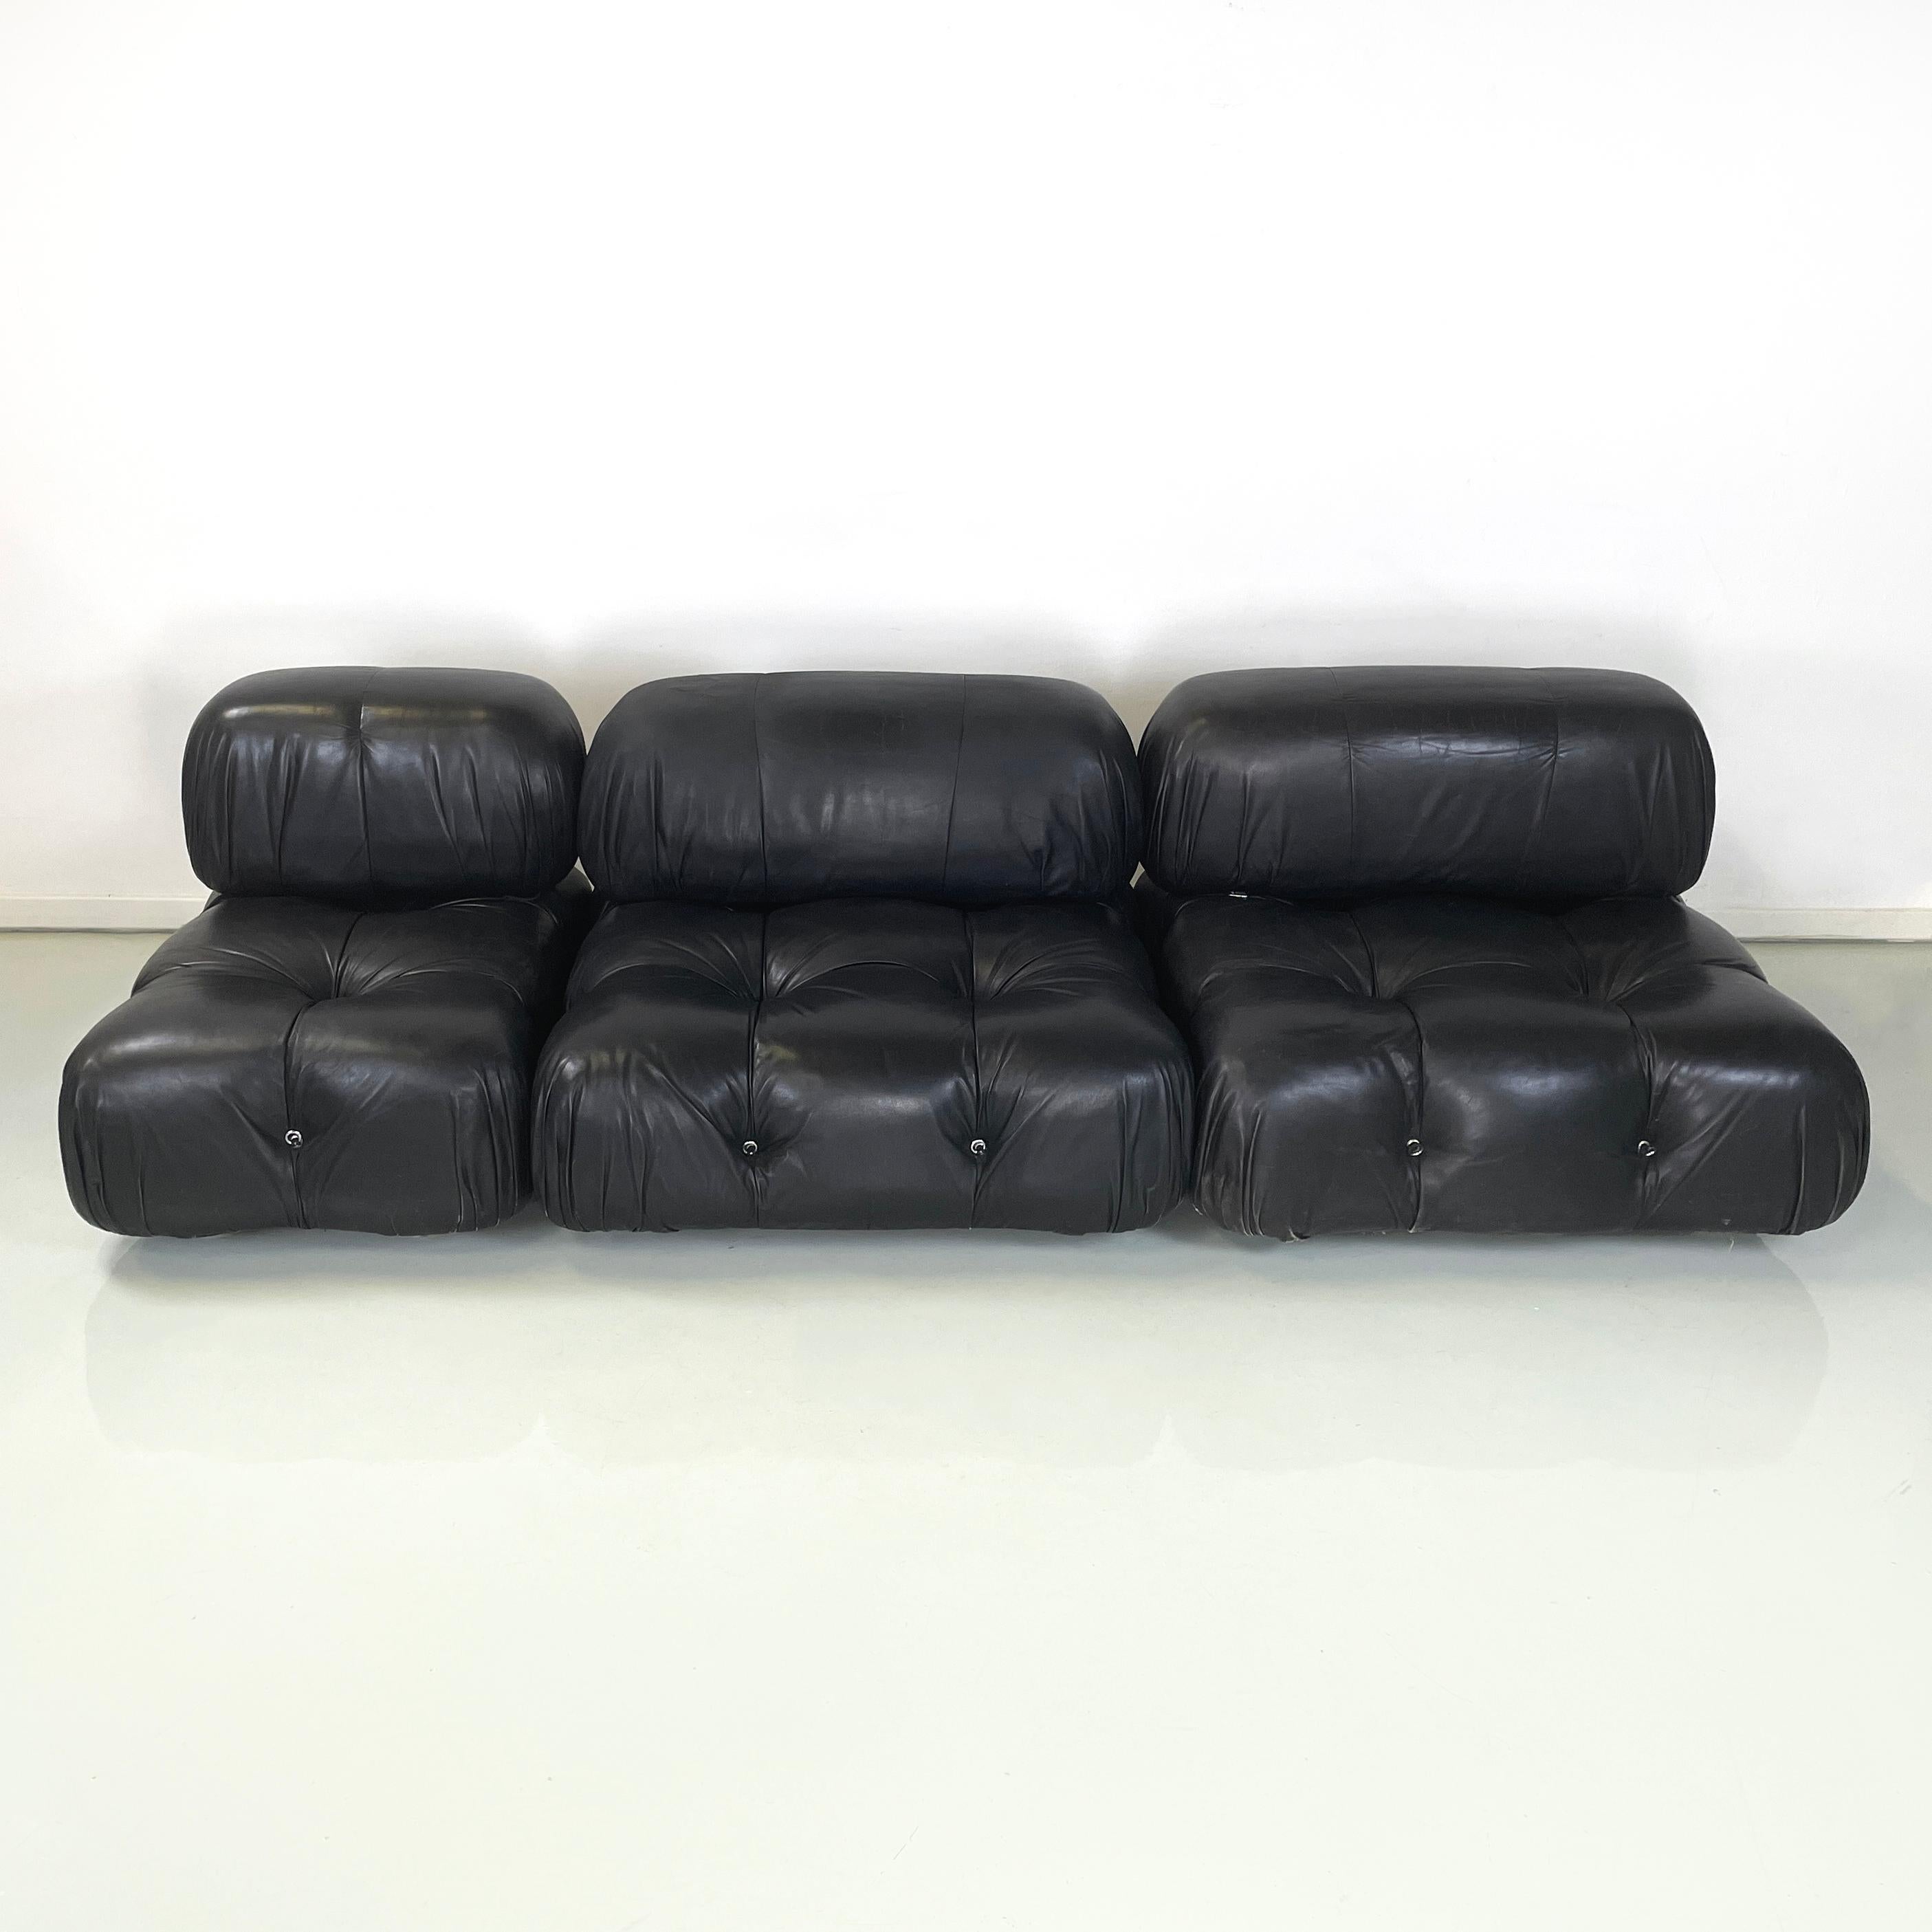 Late 20th Century Italian modern Black leather modular sofa Camaleonda by Bellini for B&B, 1970s